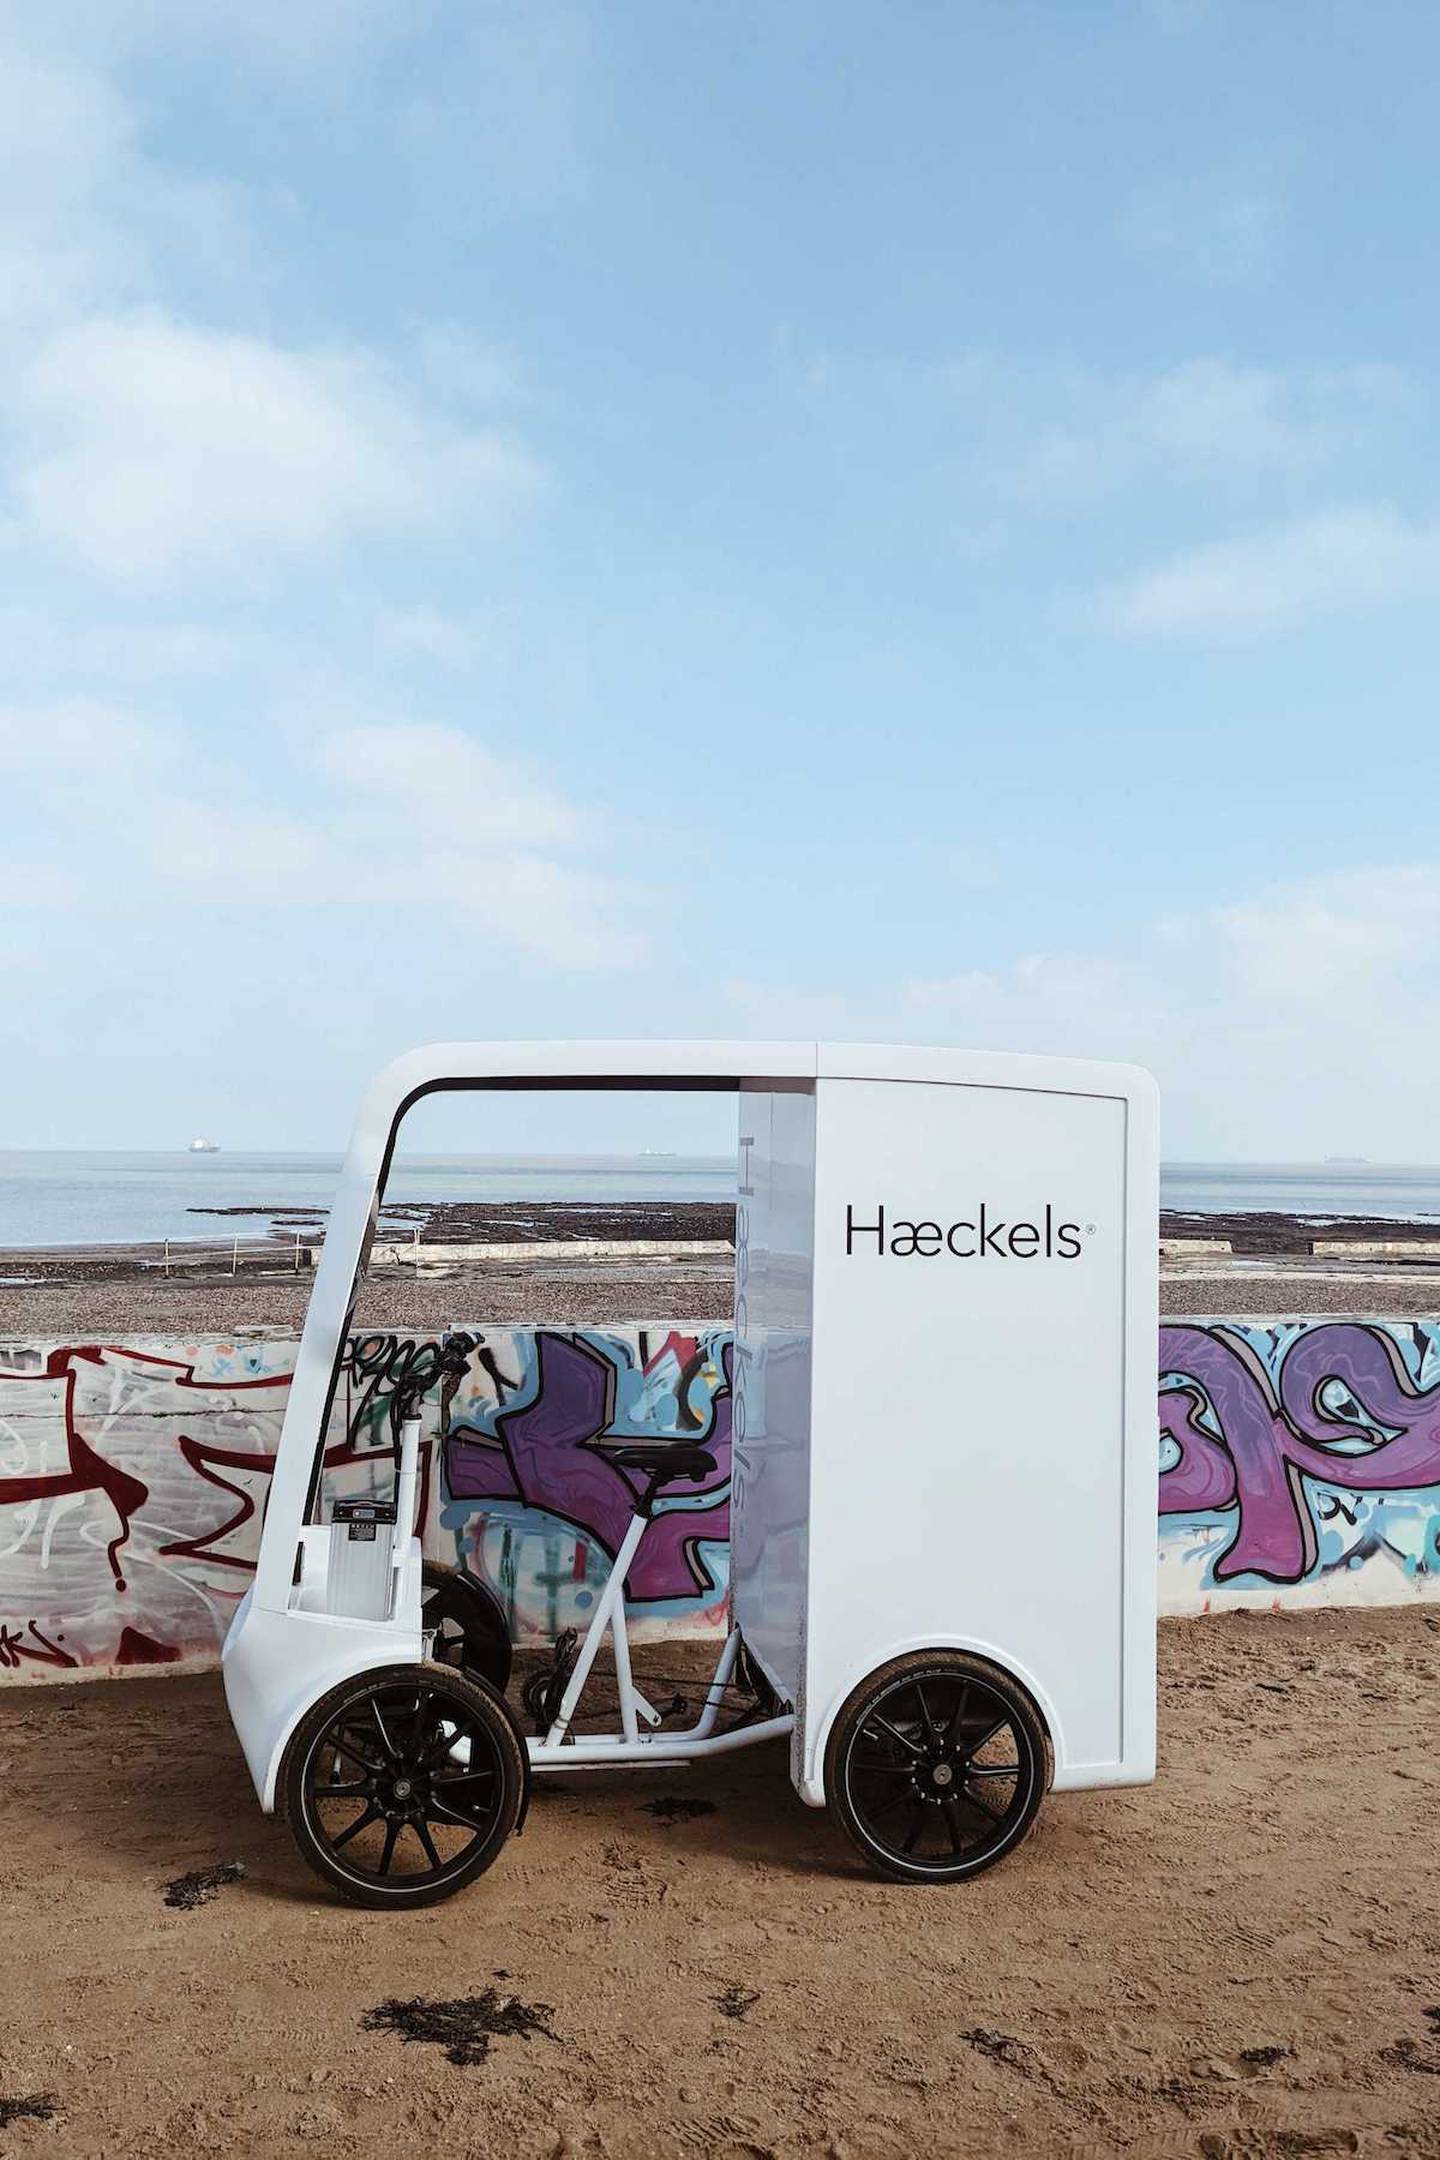 Haeckels' seaweed-harvesting e-bike, Eav.